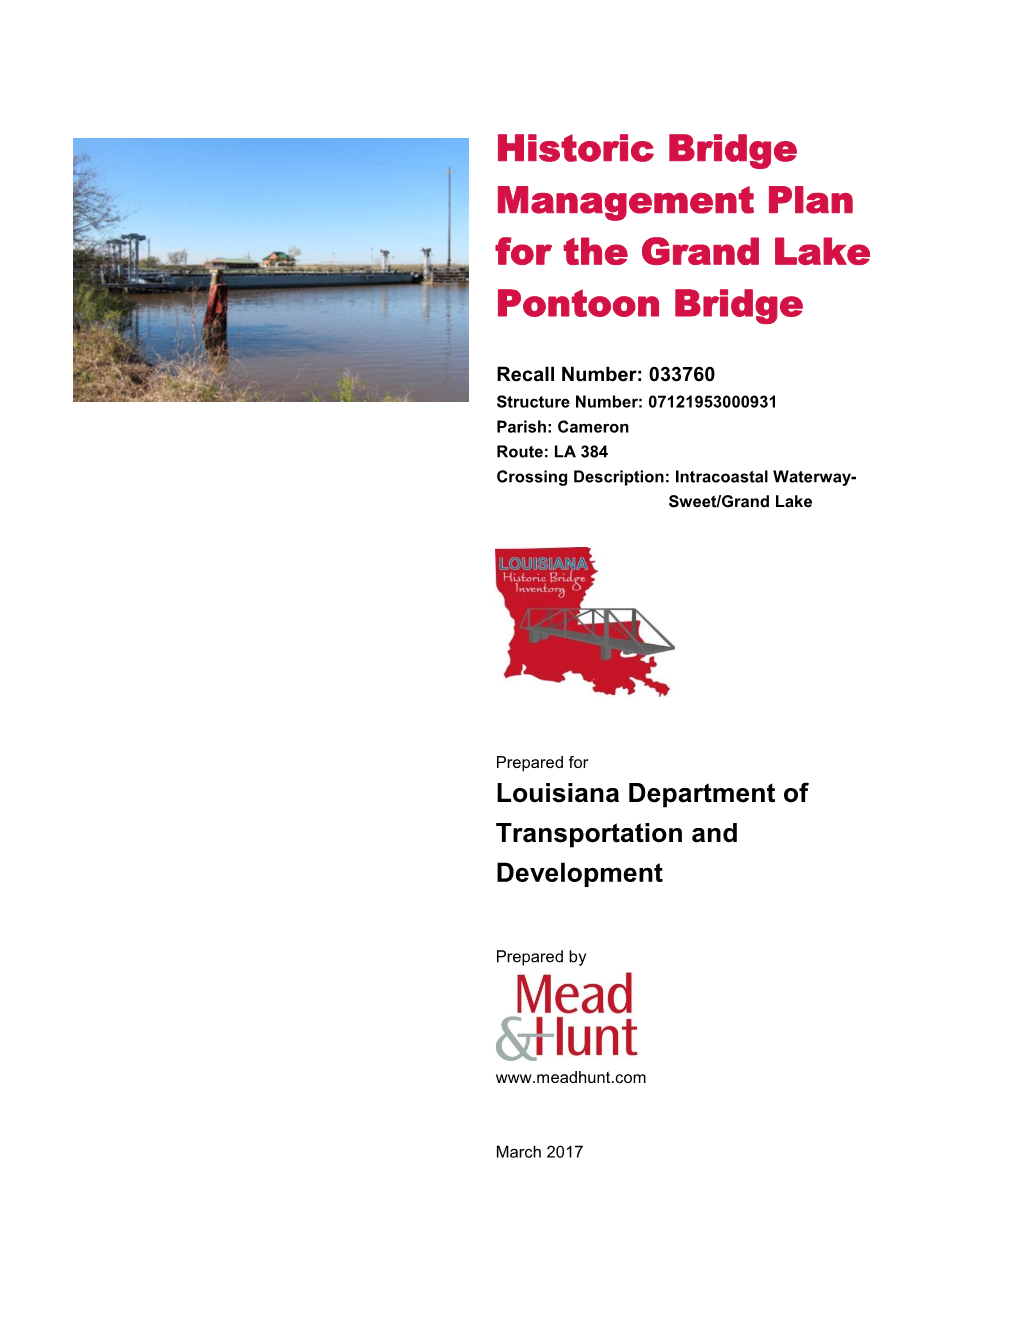 Historic Bridge Management Plan for the Grand Lake Pontoon Bridge